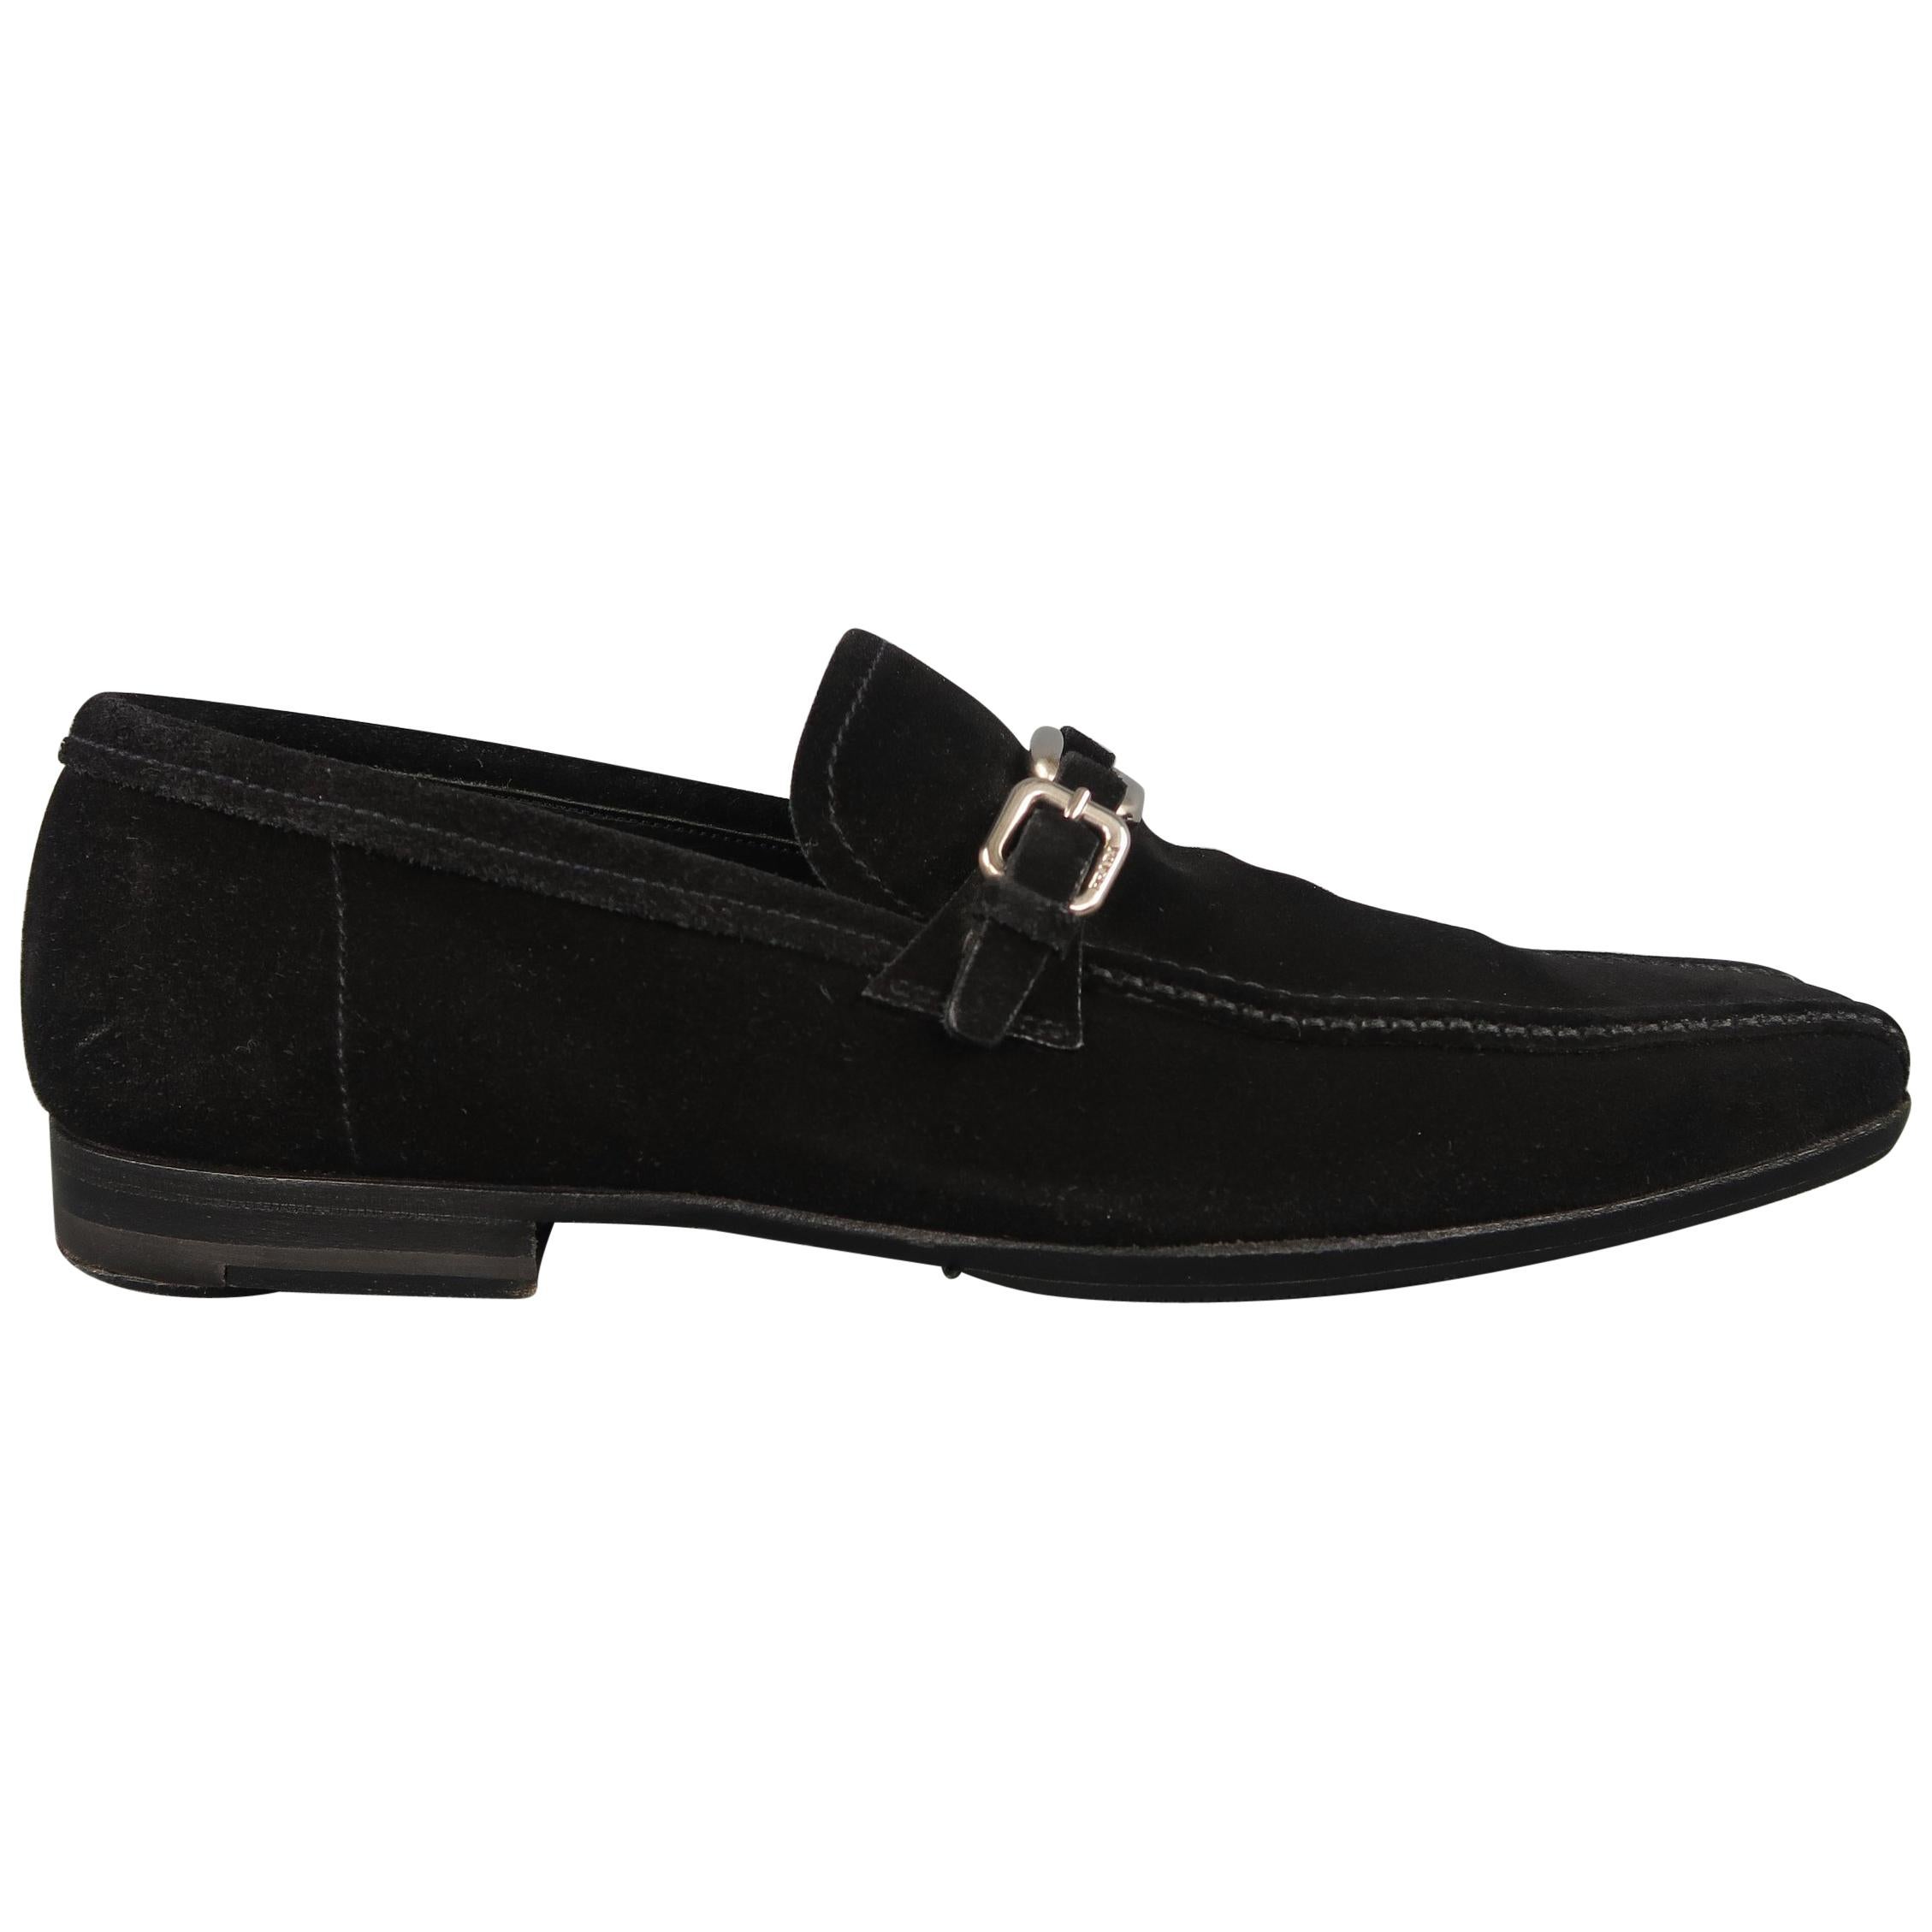 Prada Loafers - Black Suede Silver Metal Buckle Shoes